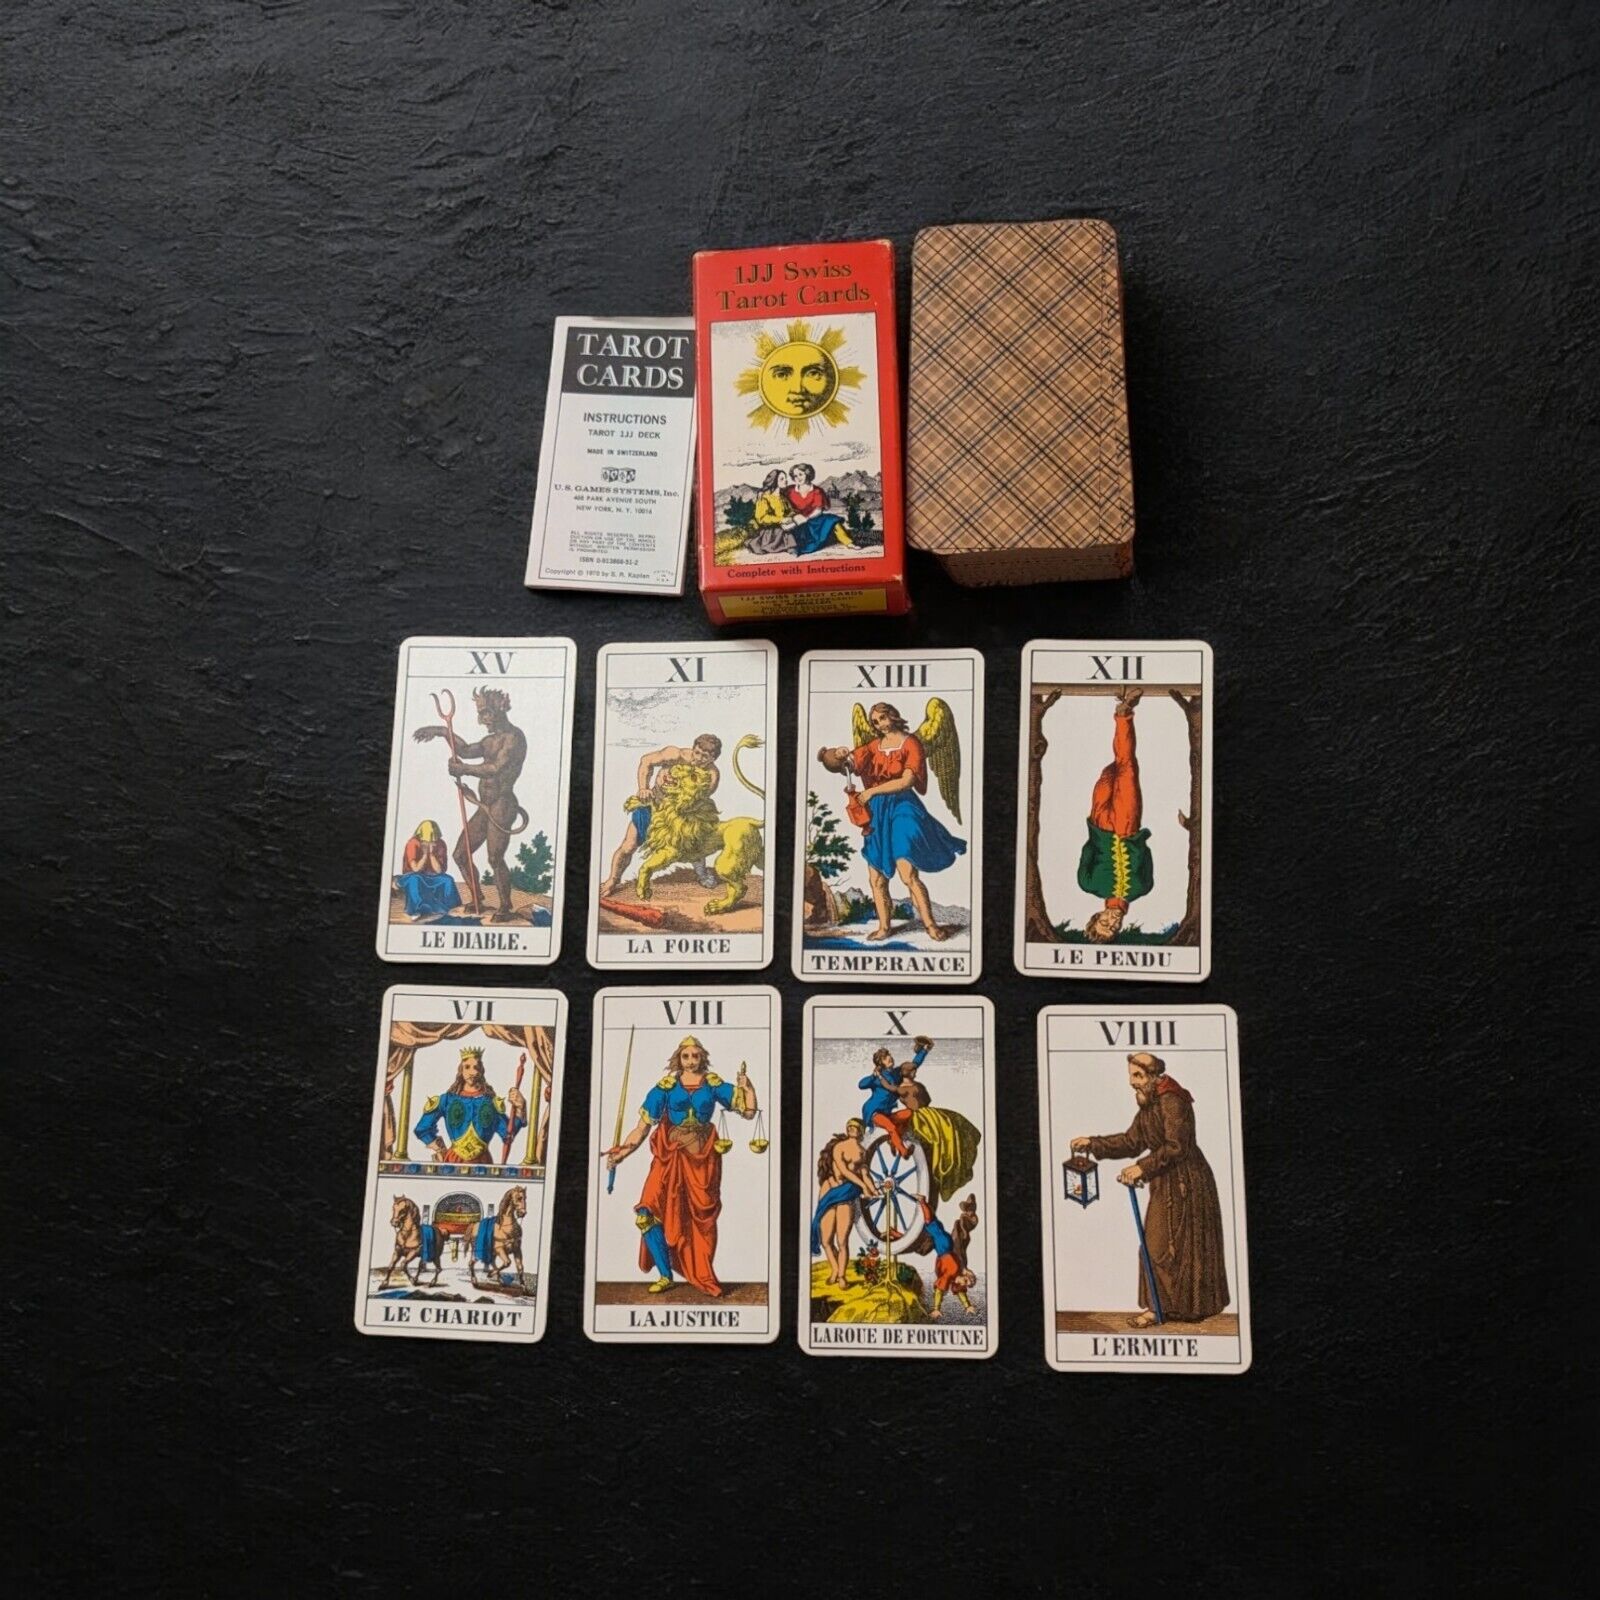 Vintage 1970 AG Muller Swiss TAROT CARDS 1JJ US Games in Box Deck